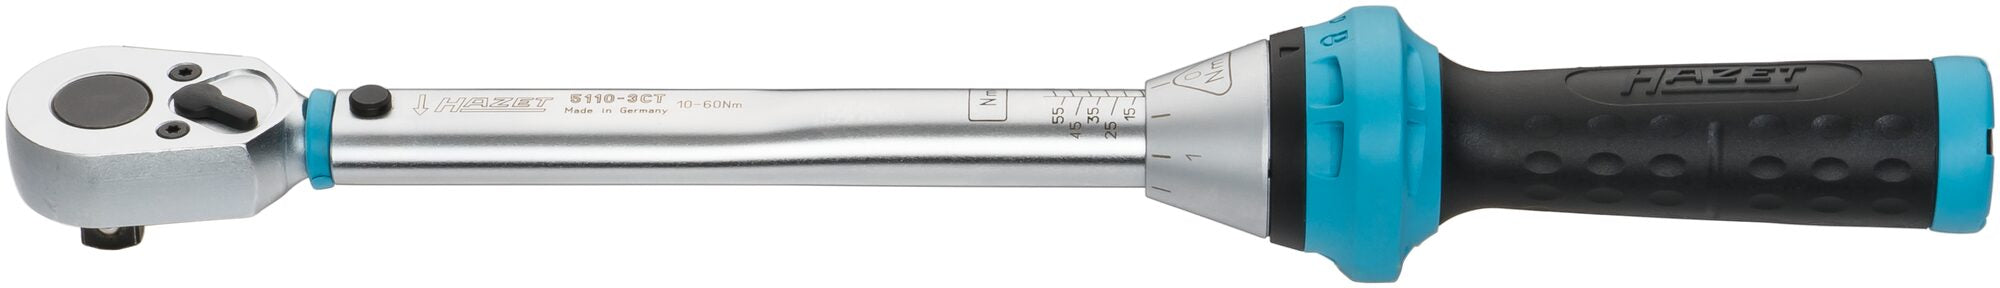 Hazet 5110-3CT 3/8 Torque Wrench, 10-60 Nm